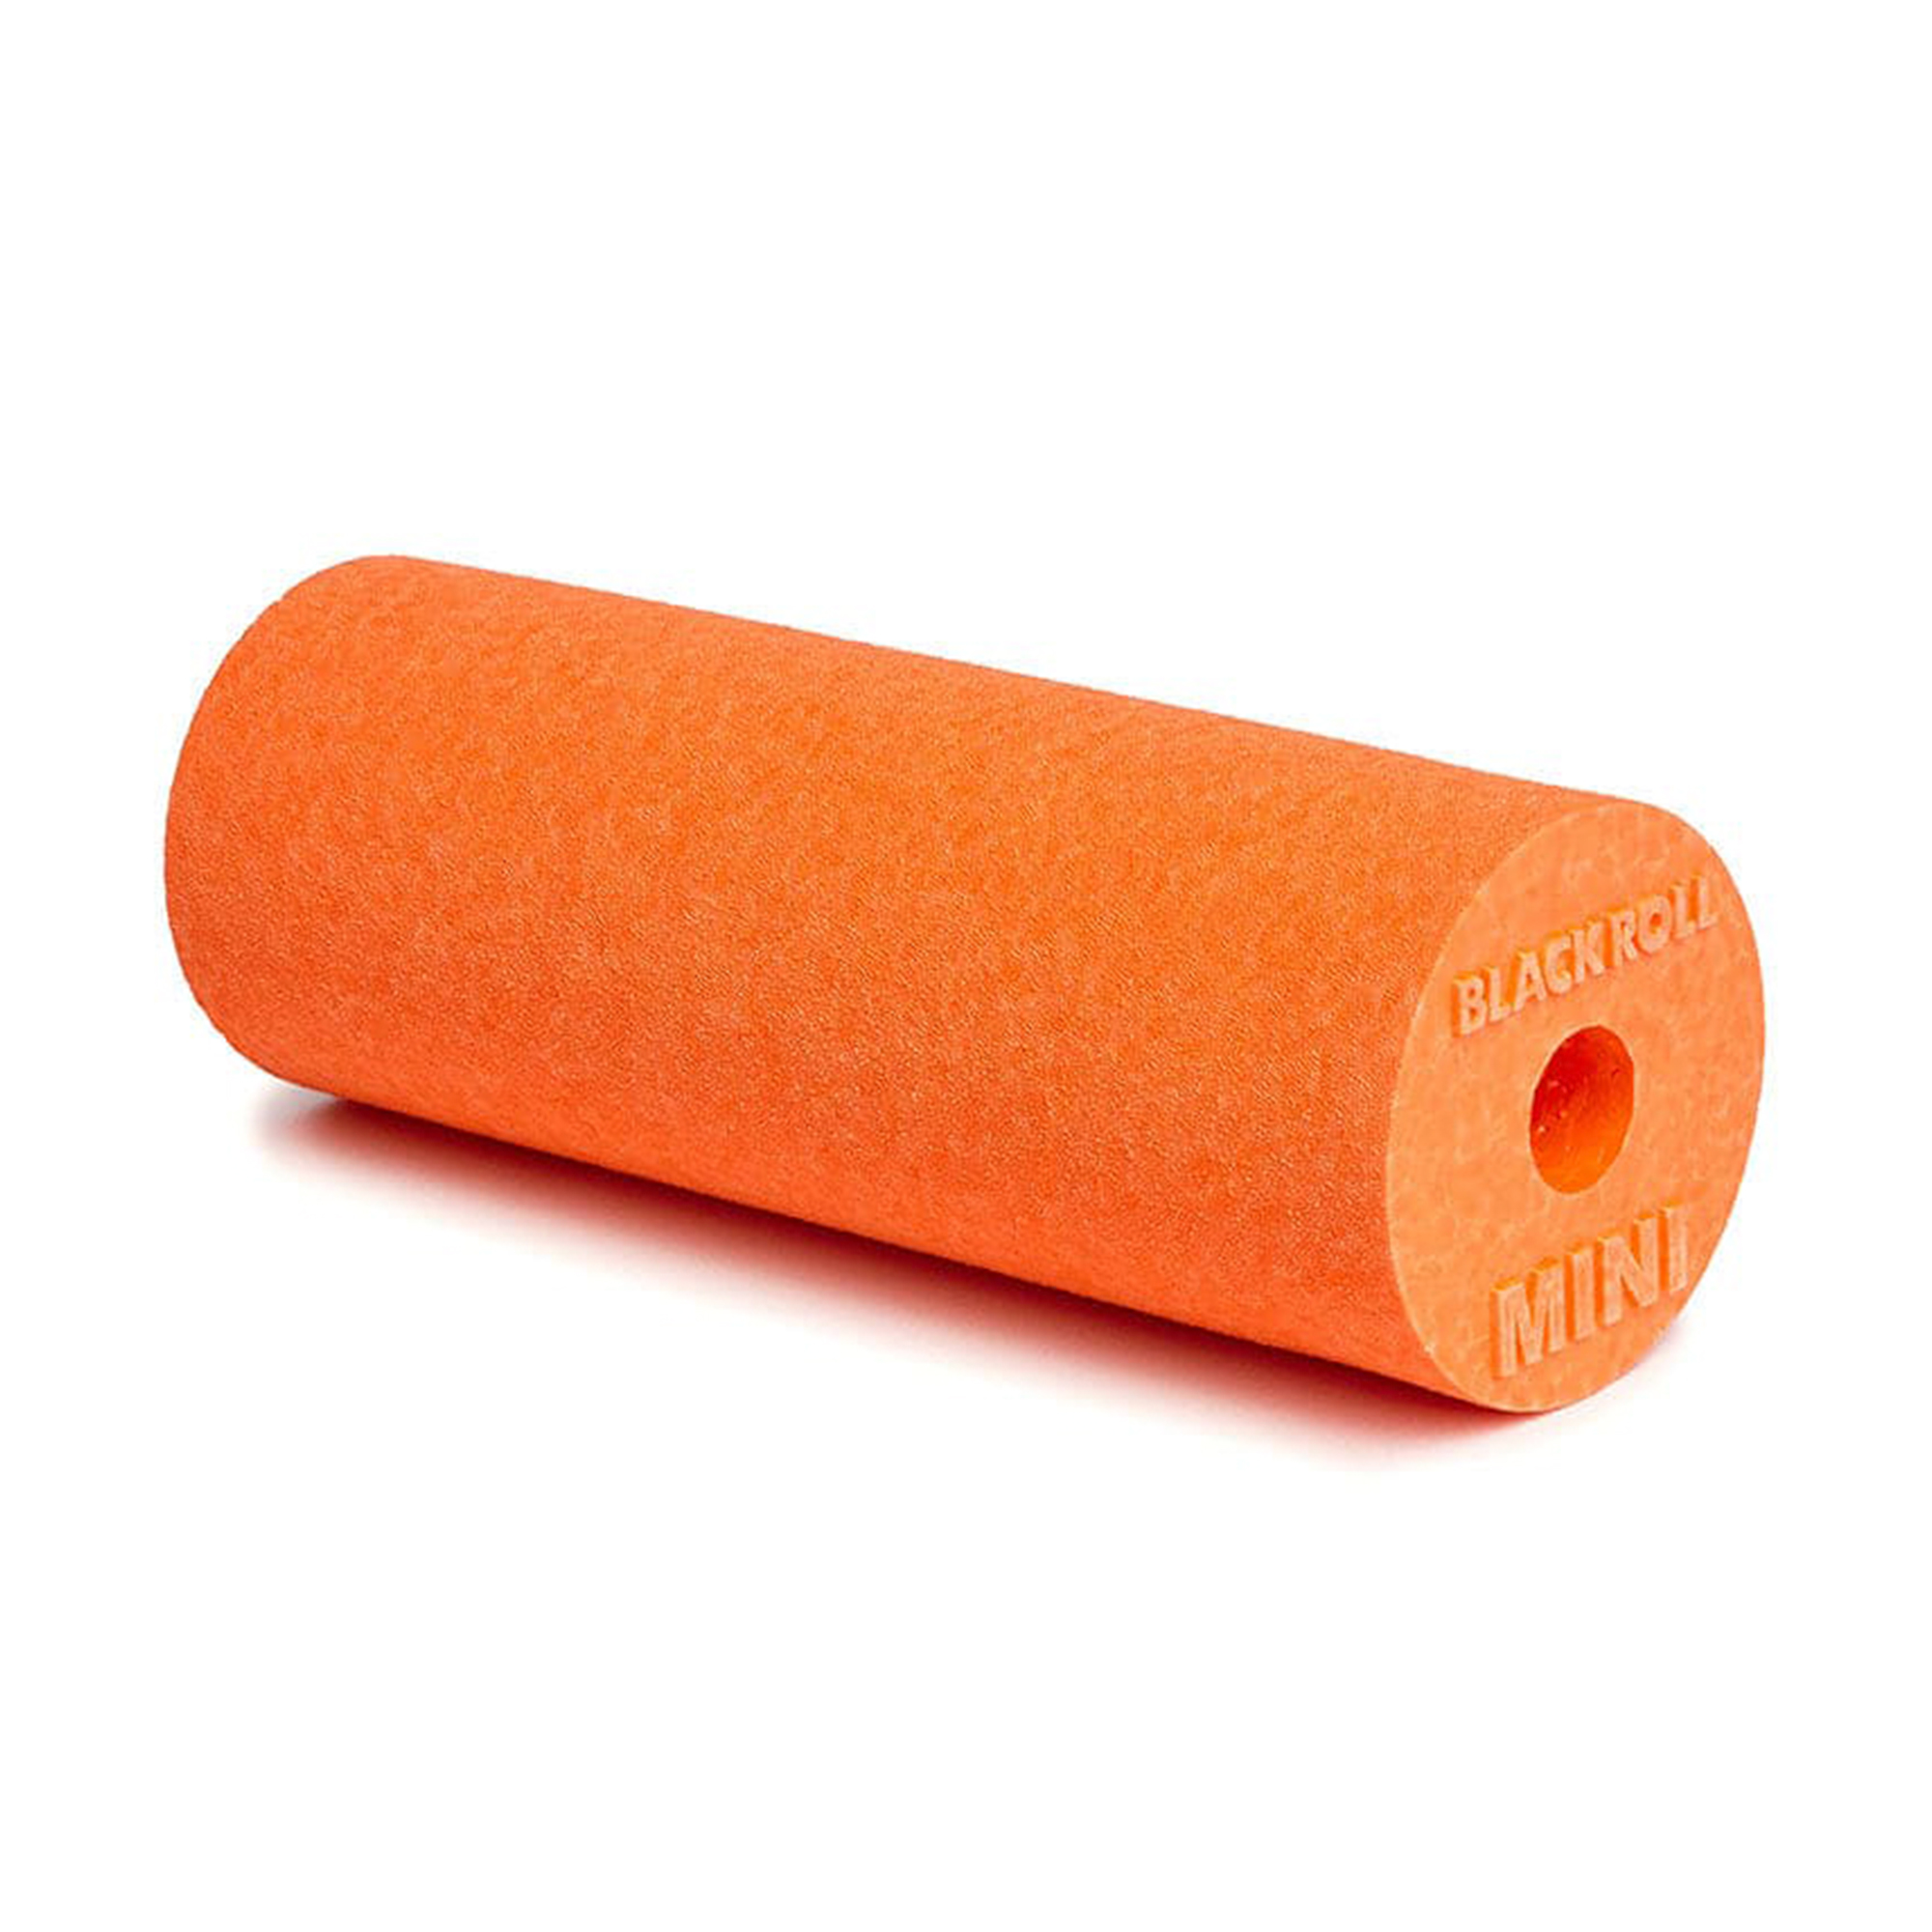 Blackroll Mini Foam Roller Orange - 15 x 6 cm